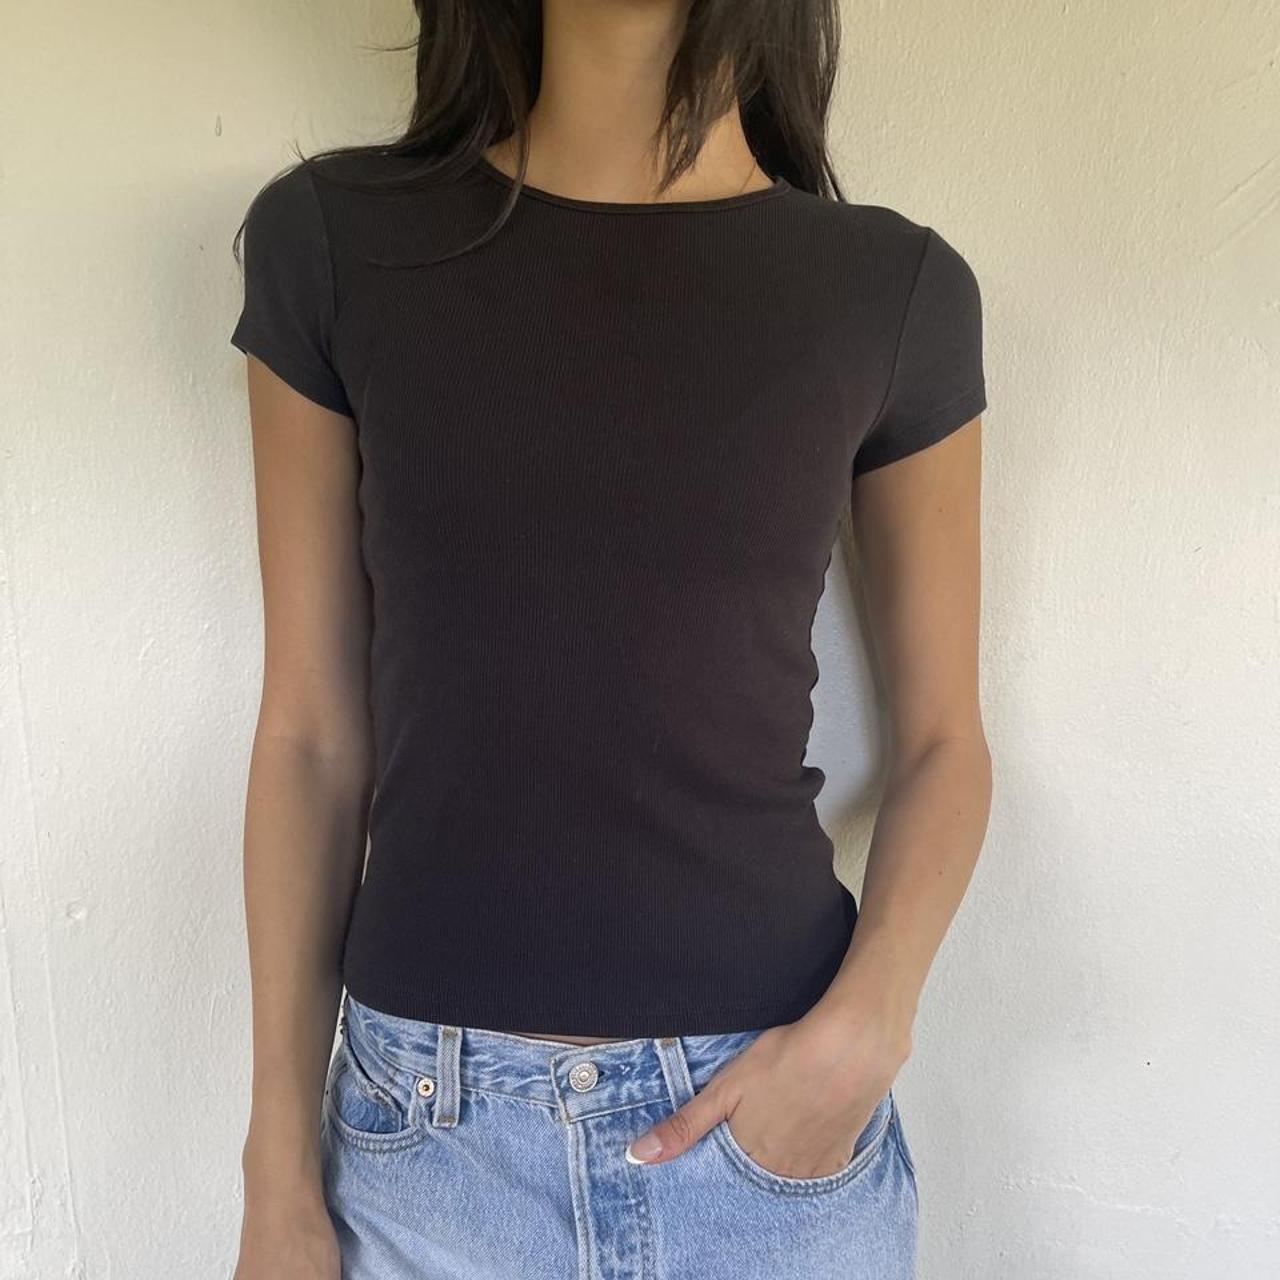 Cotton On Women's Black T-shirt